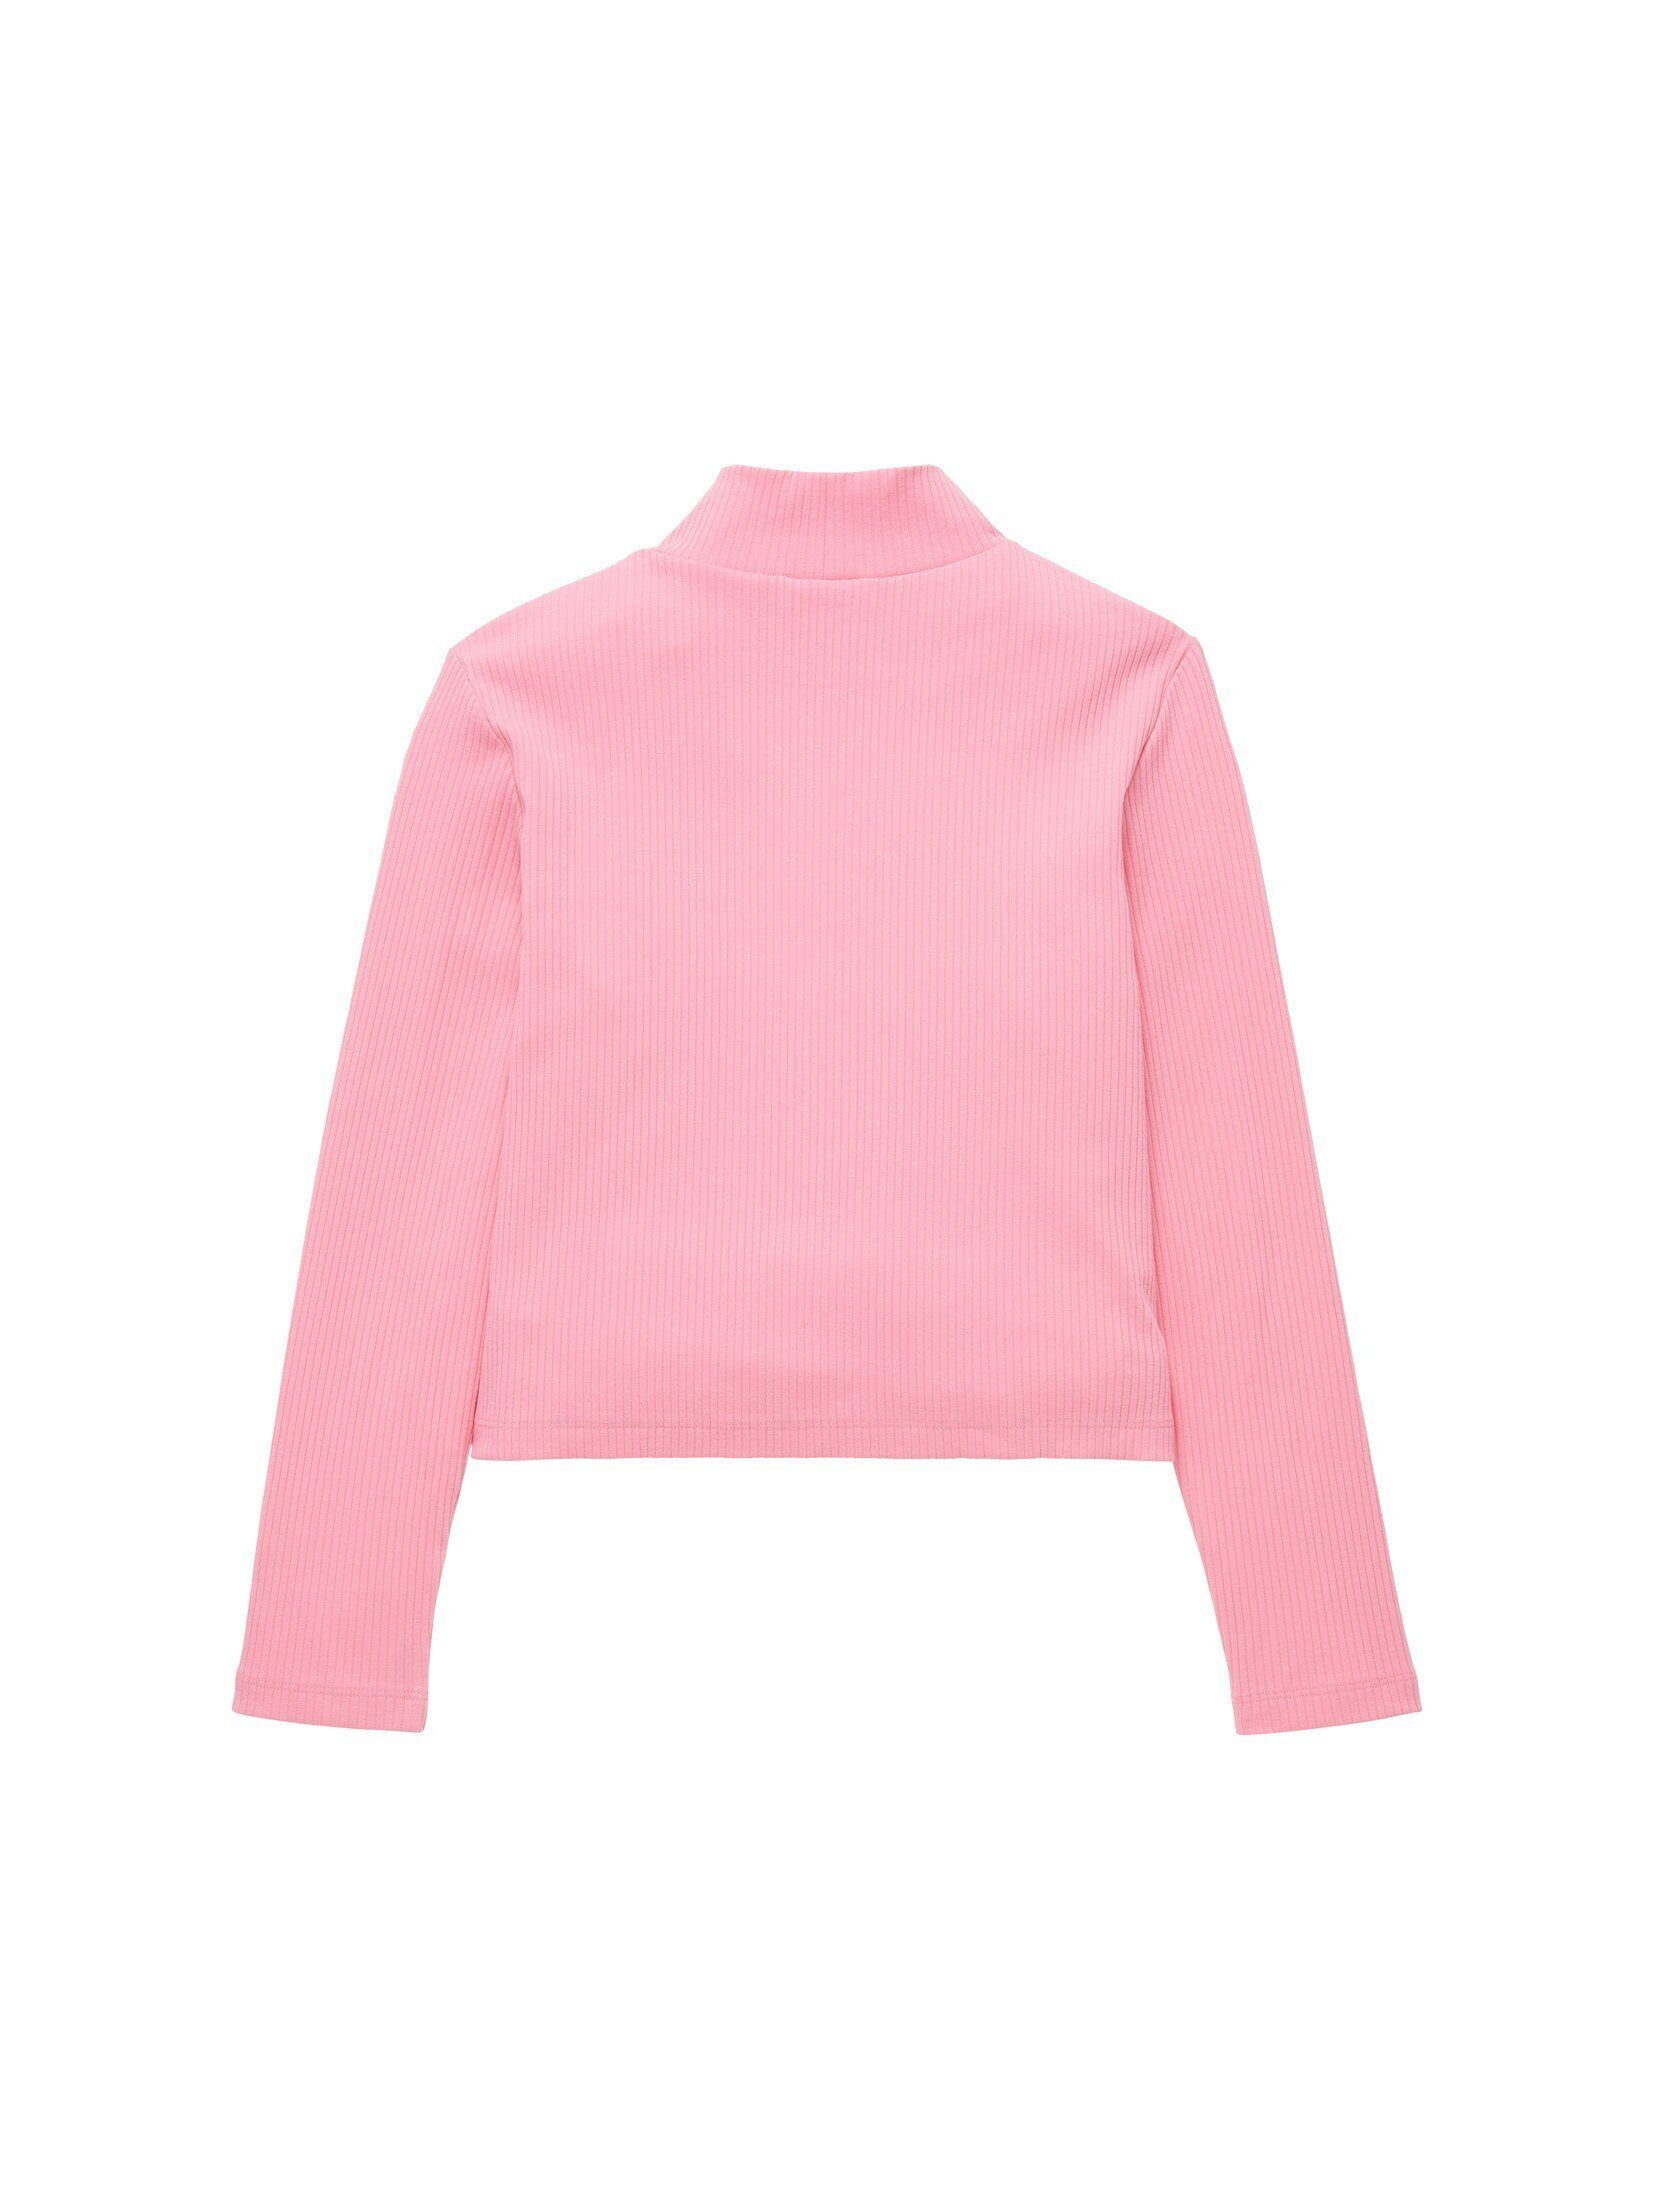 TOM TAILOR T-Shirt Cropped pink Langarmshirt Polyester sunrise recyceltem mit